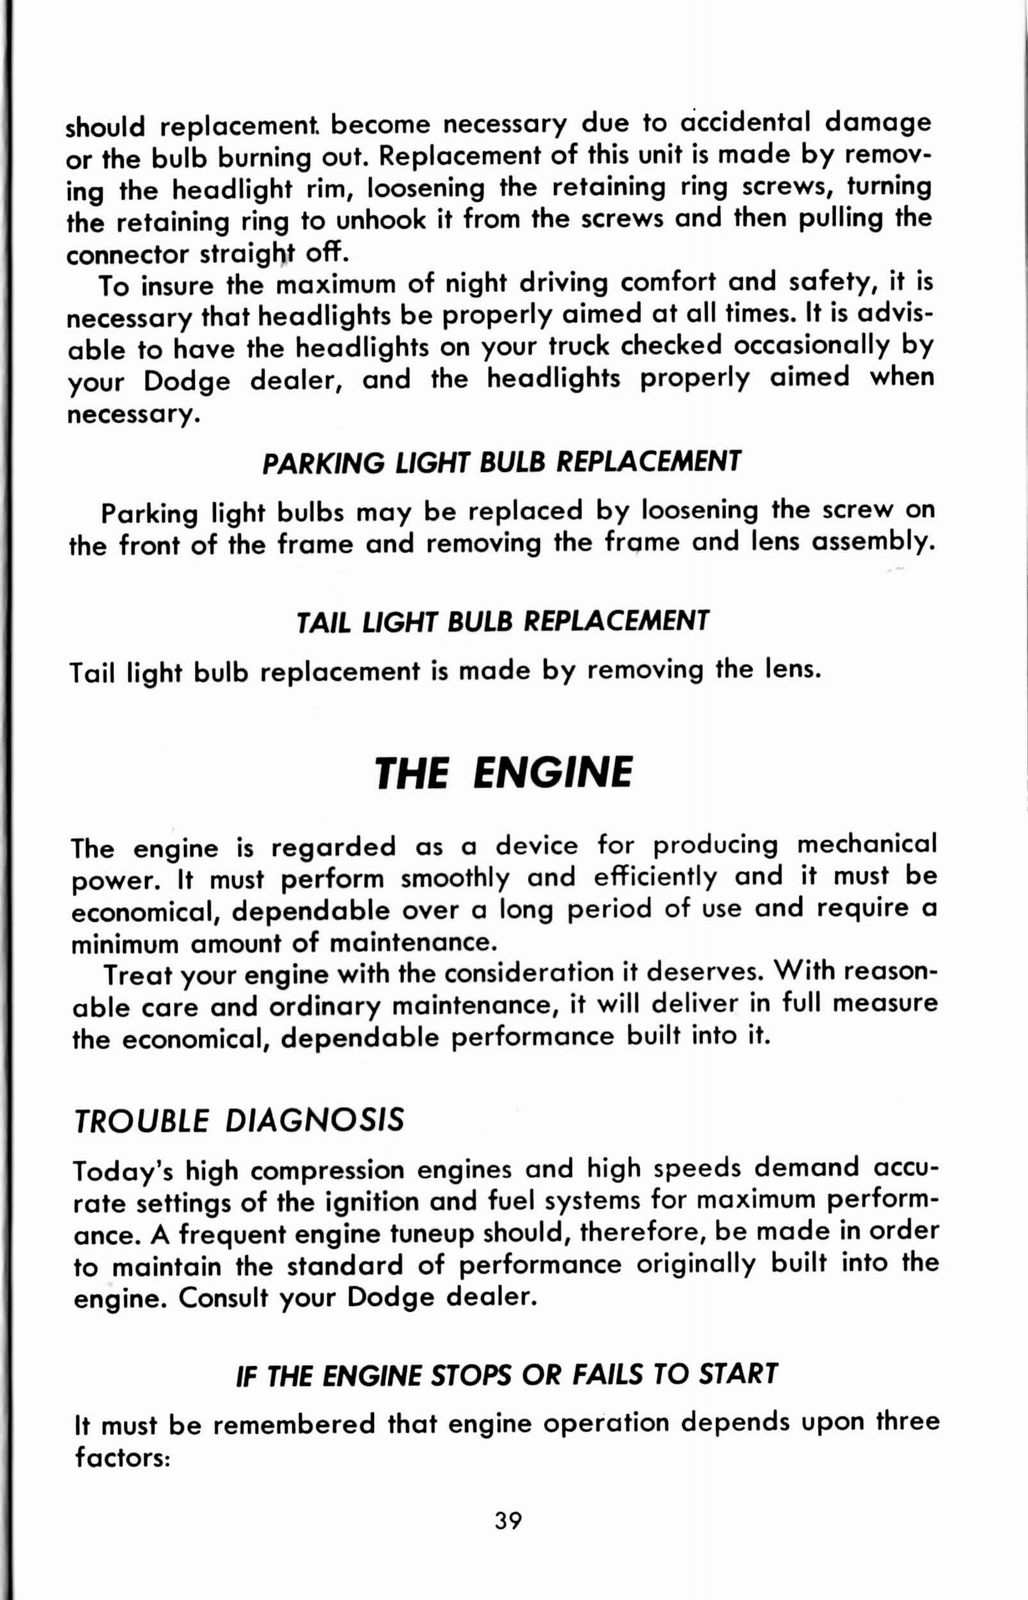 n_1949 Dodge Truck Manual-41.jpg